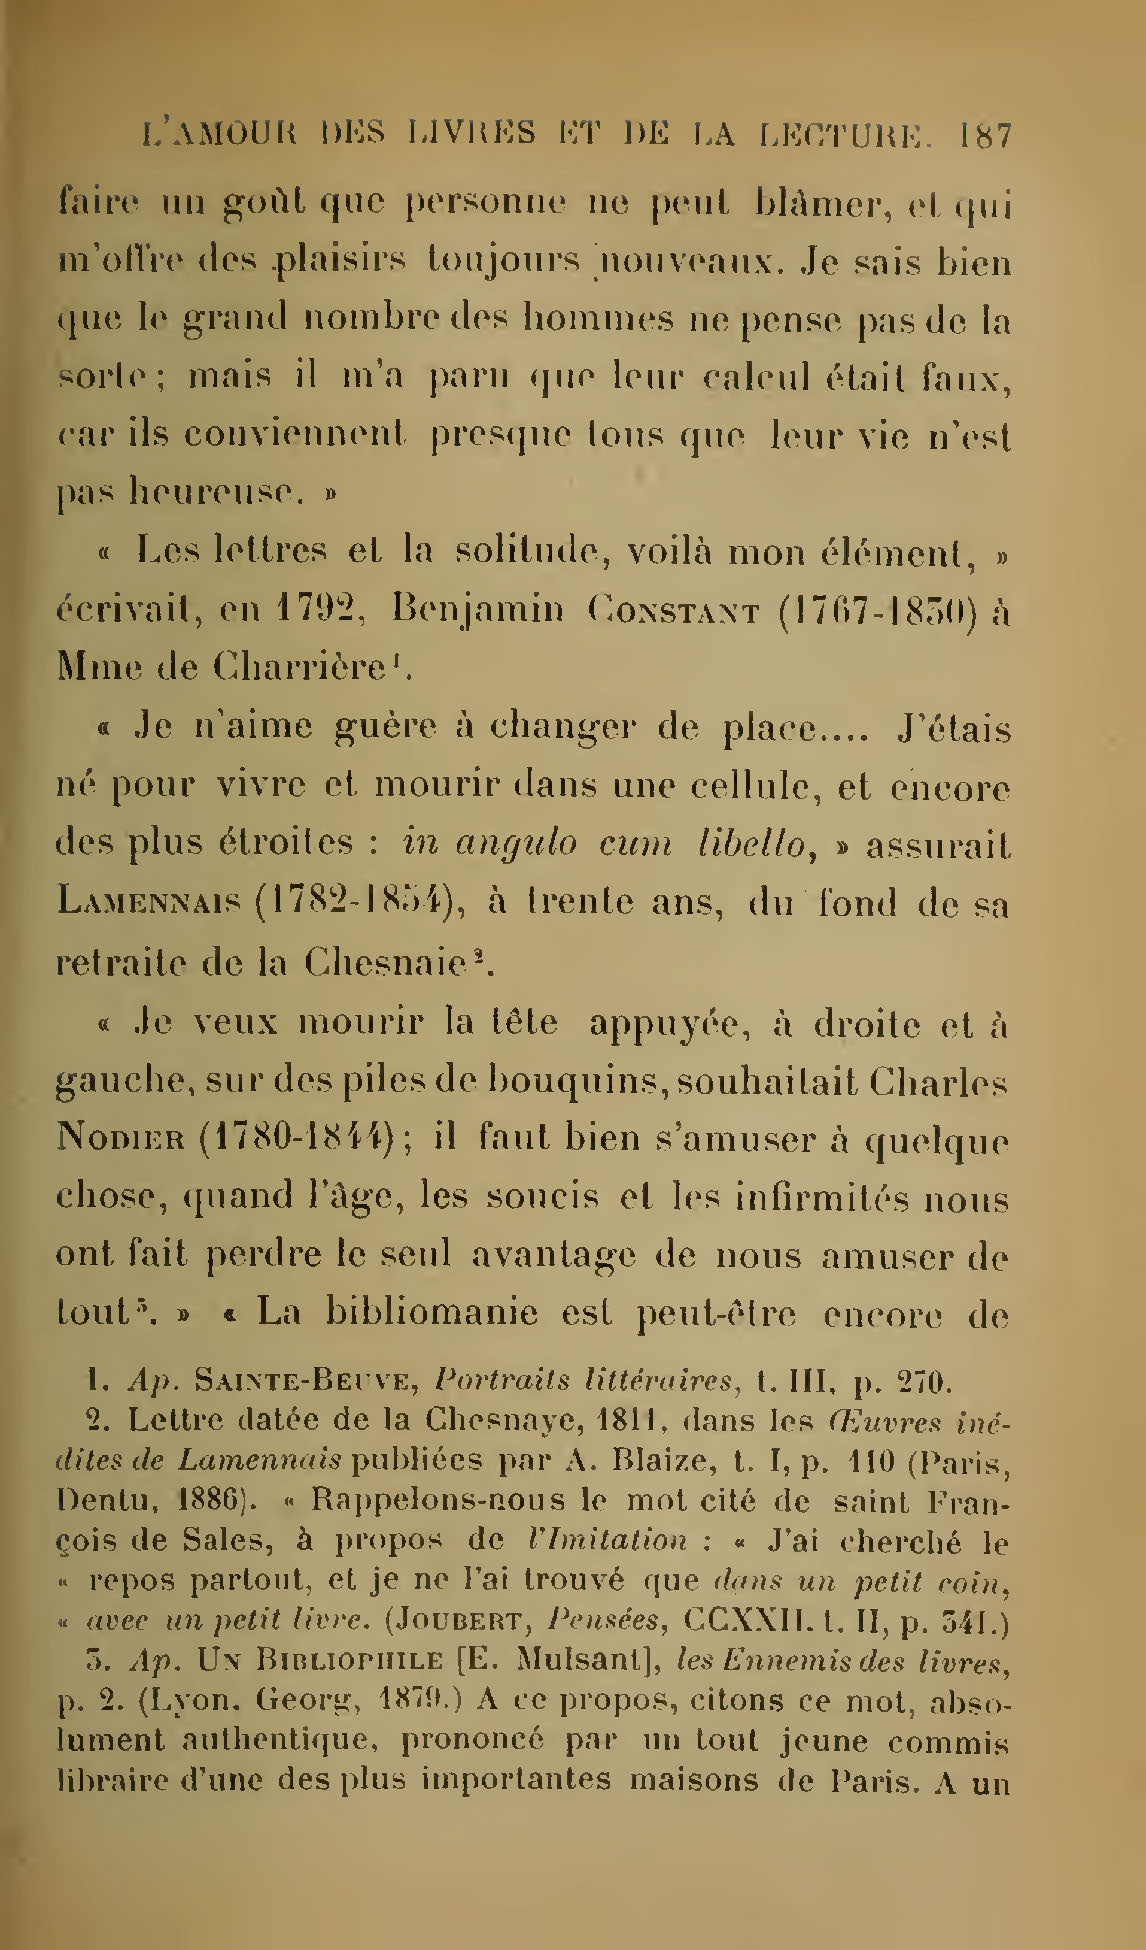 Albert Cim, Le Livre, t. I, p. 187.